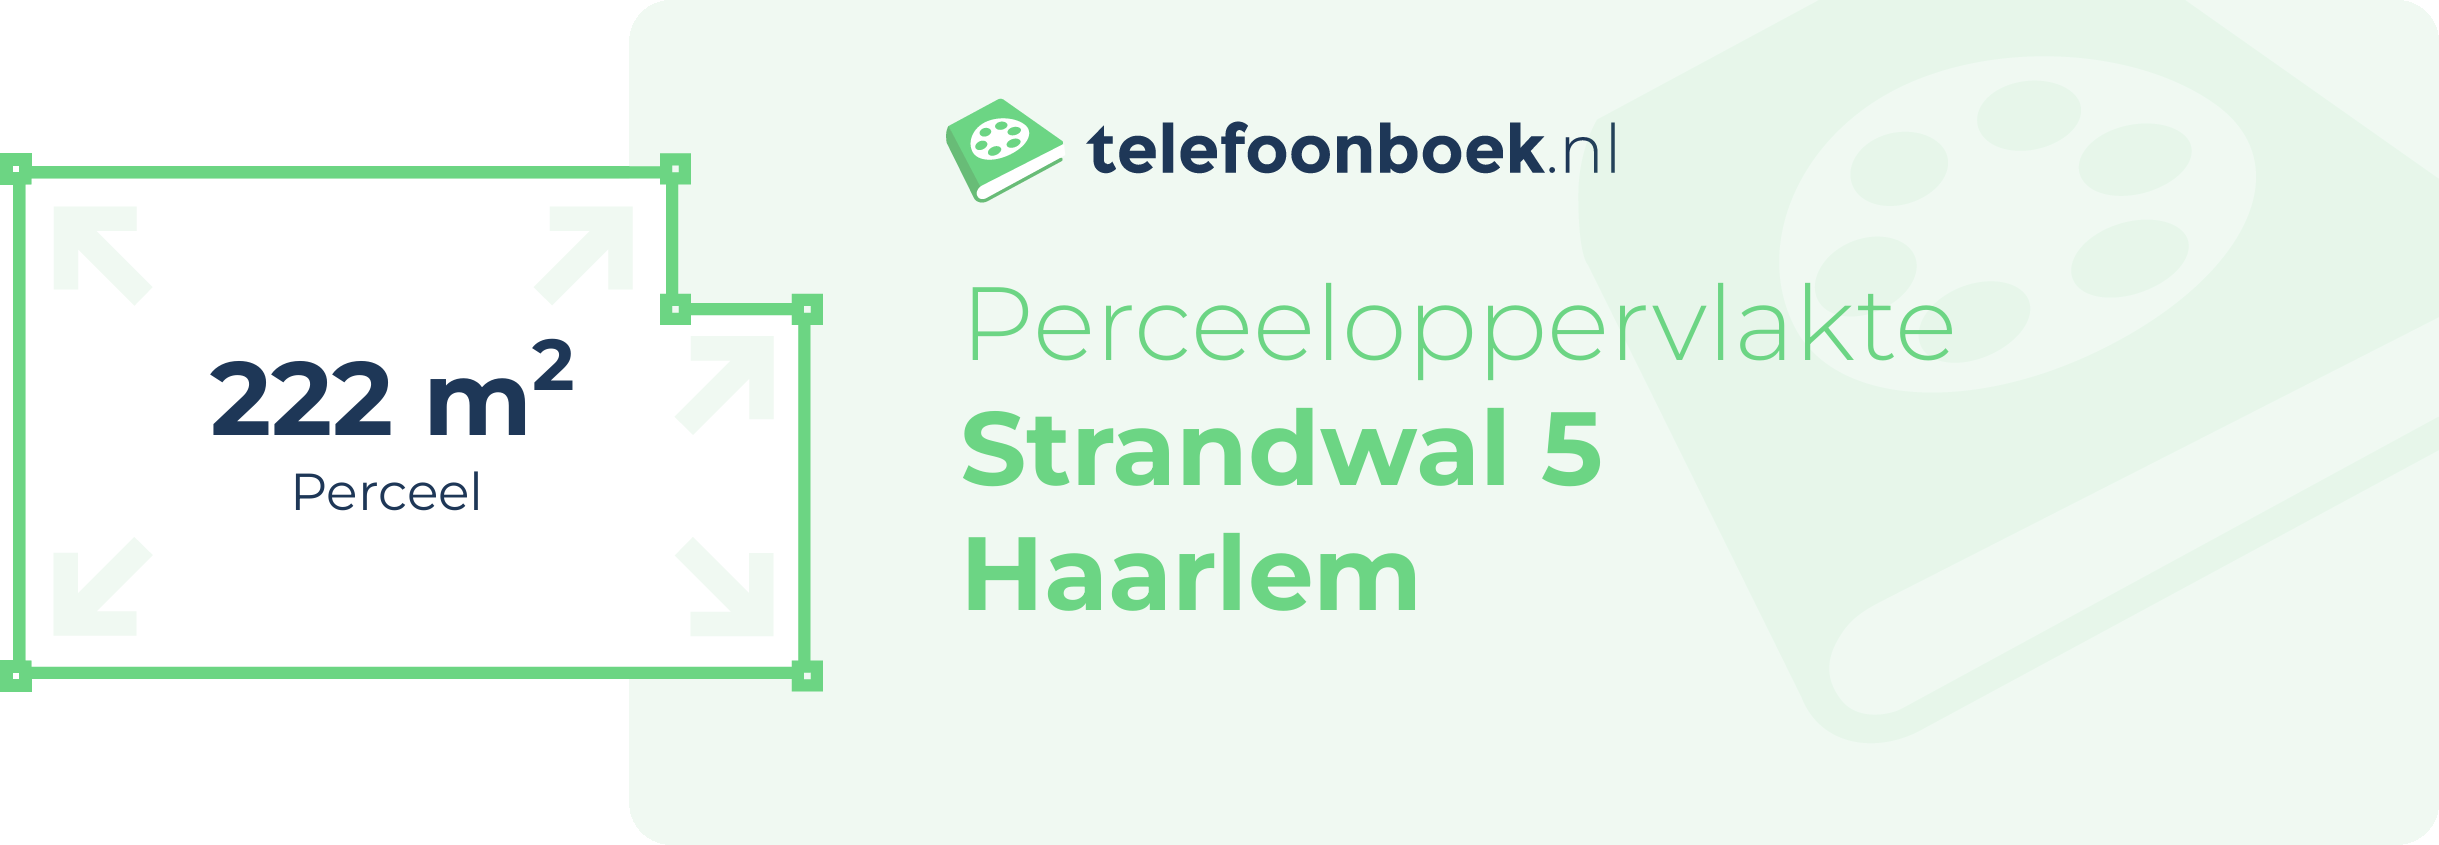 Perceeloppervlakte Strandwal 5 Haarlem